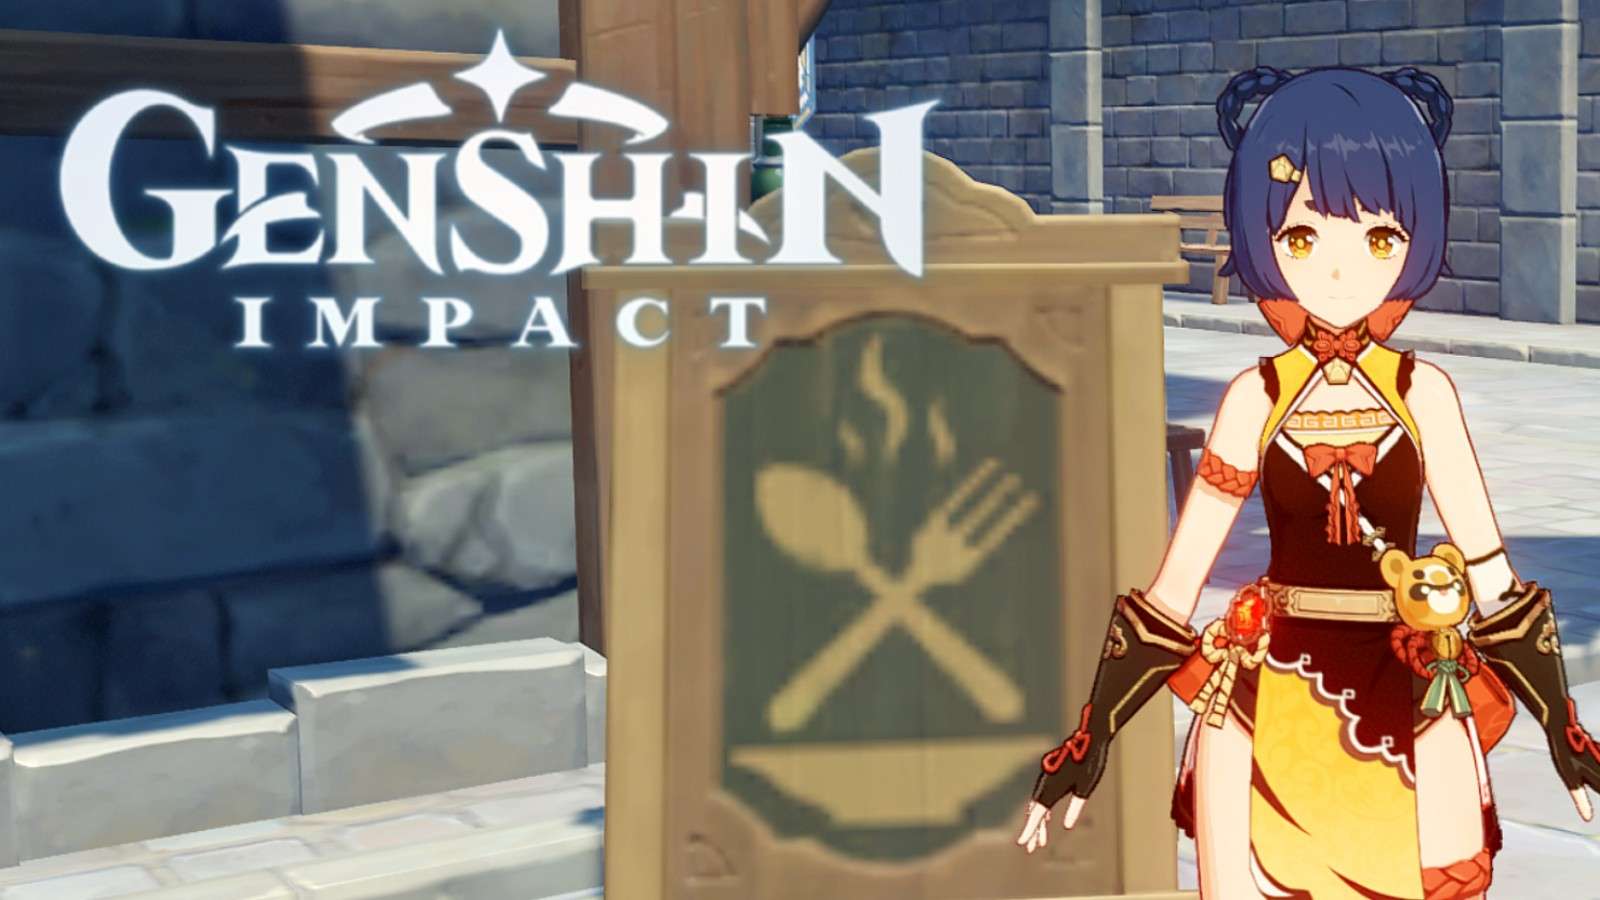 Genshin Impact character next to the logo